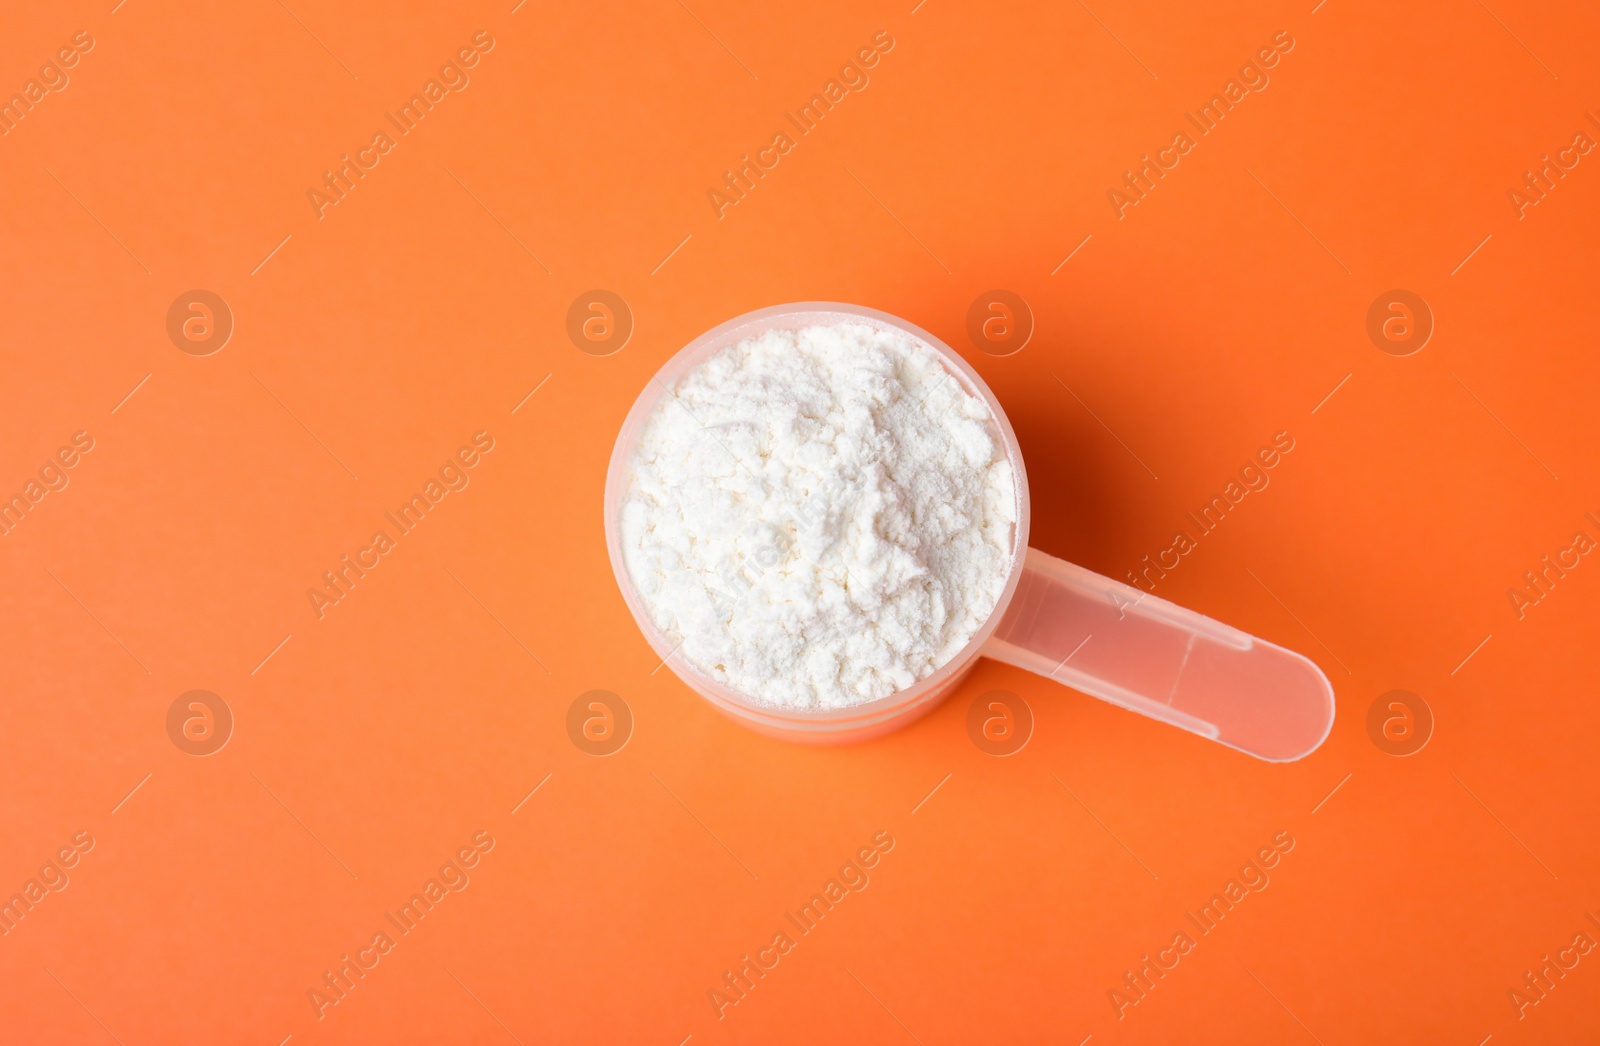 Photo of Scoop of protein powder on orange background, top view